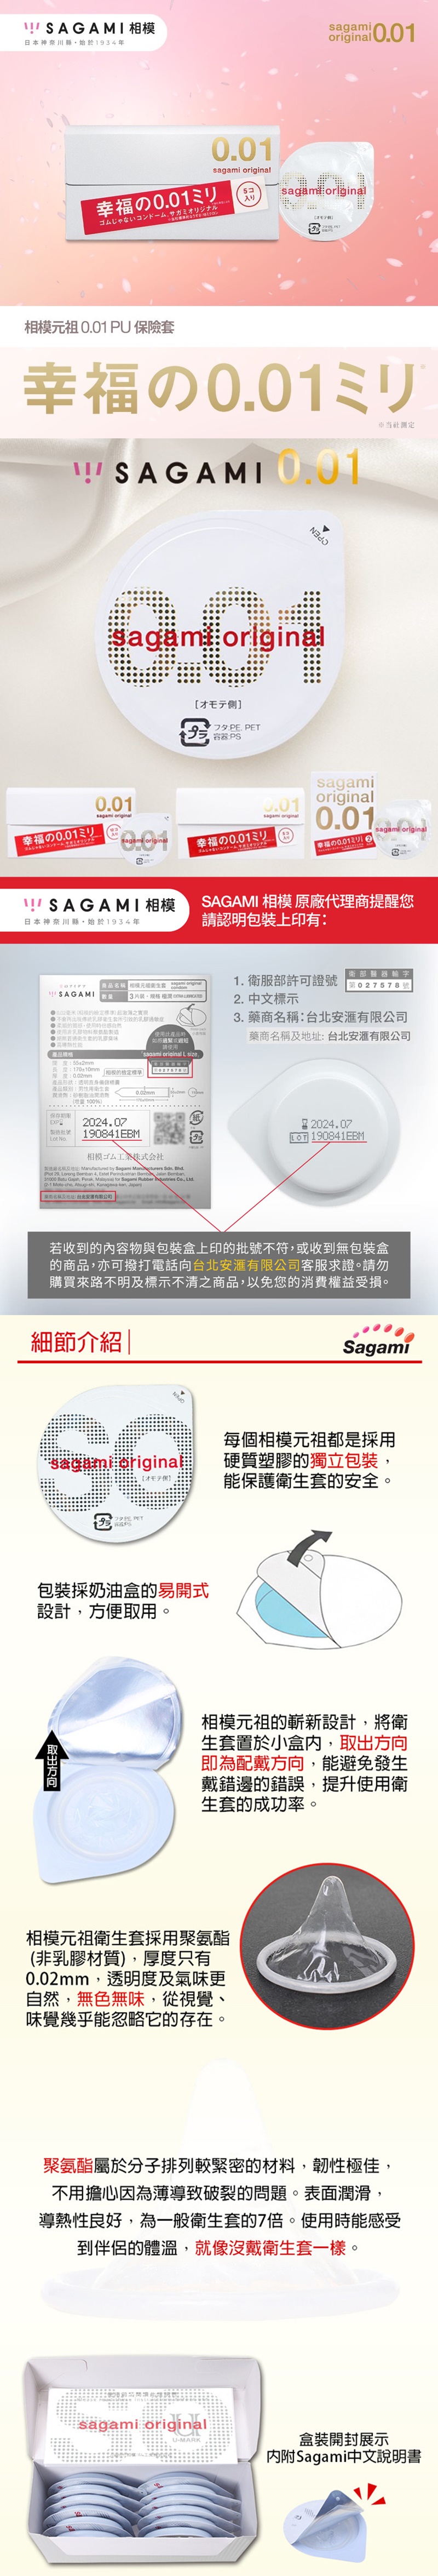 sagami 相模元祖 001 極致薄 55mm 保險套 5入裝 長條圖 800X800.jpg